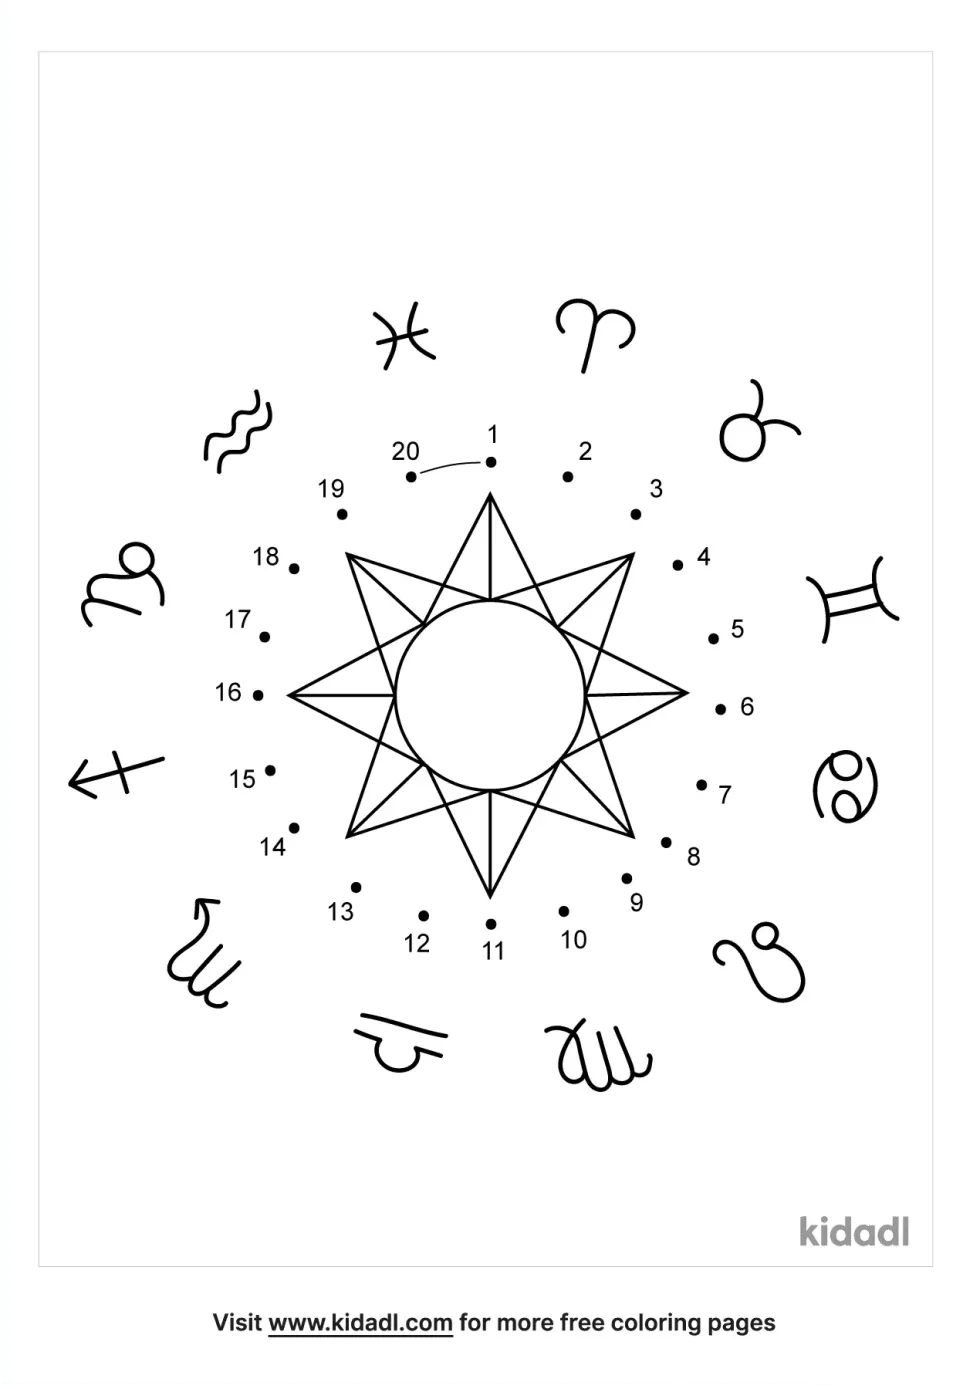 Zodiac Constellation